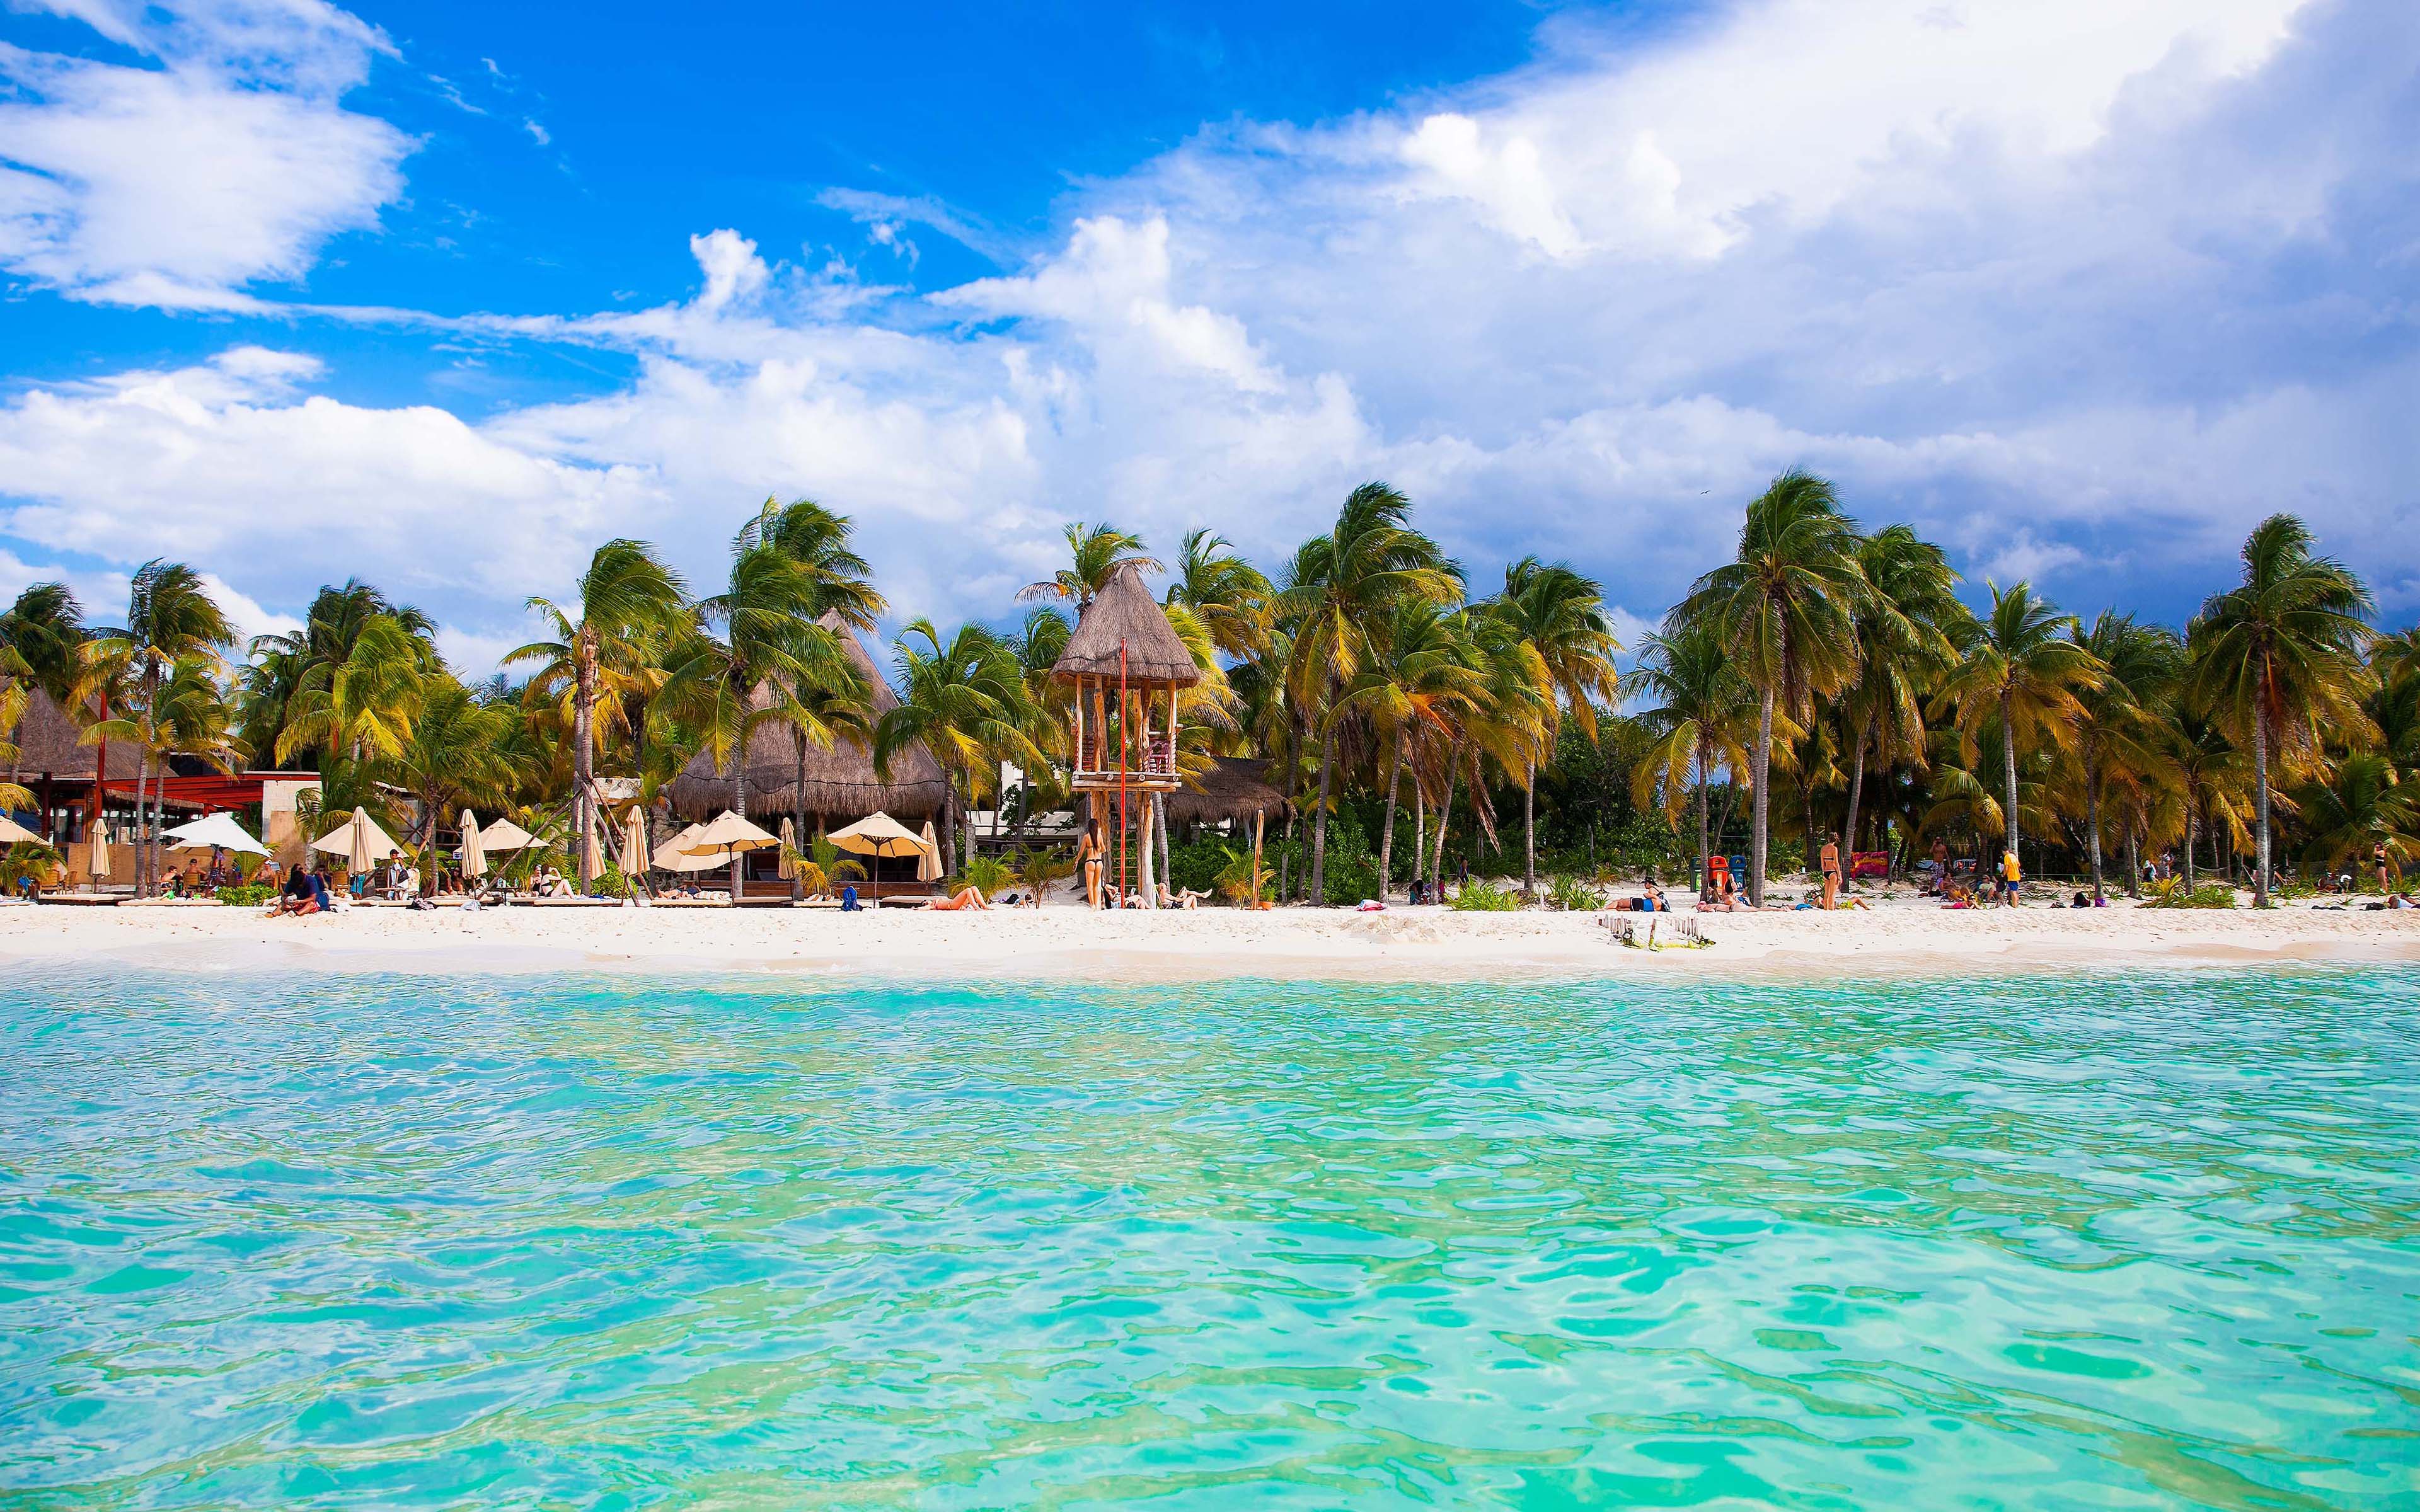 Cancun Beach Mexico A City On The Yucatan Peninsula That Borders